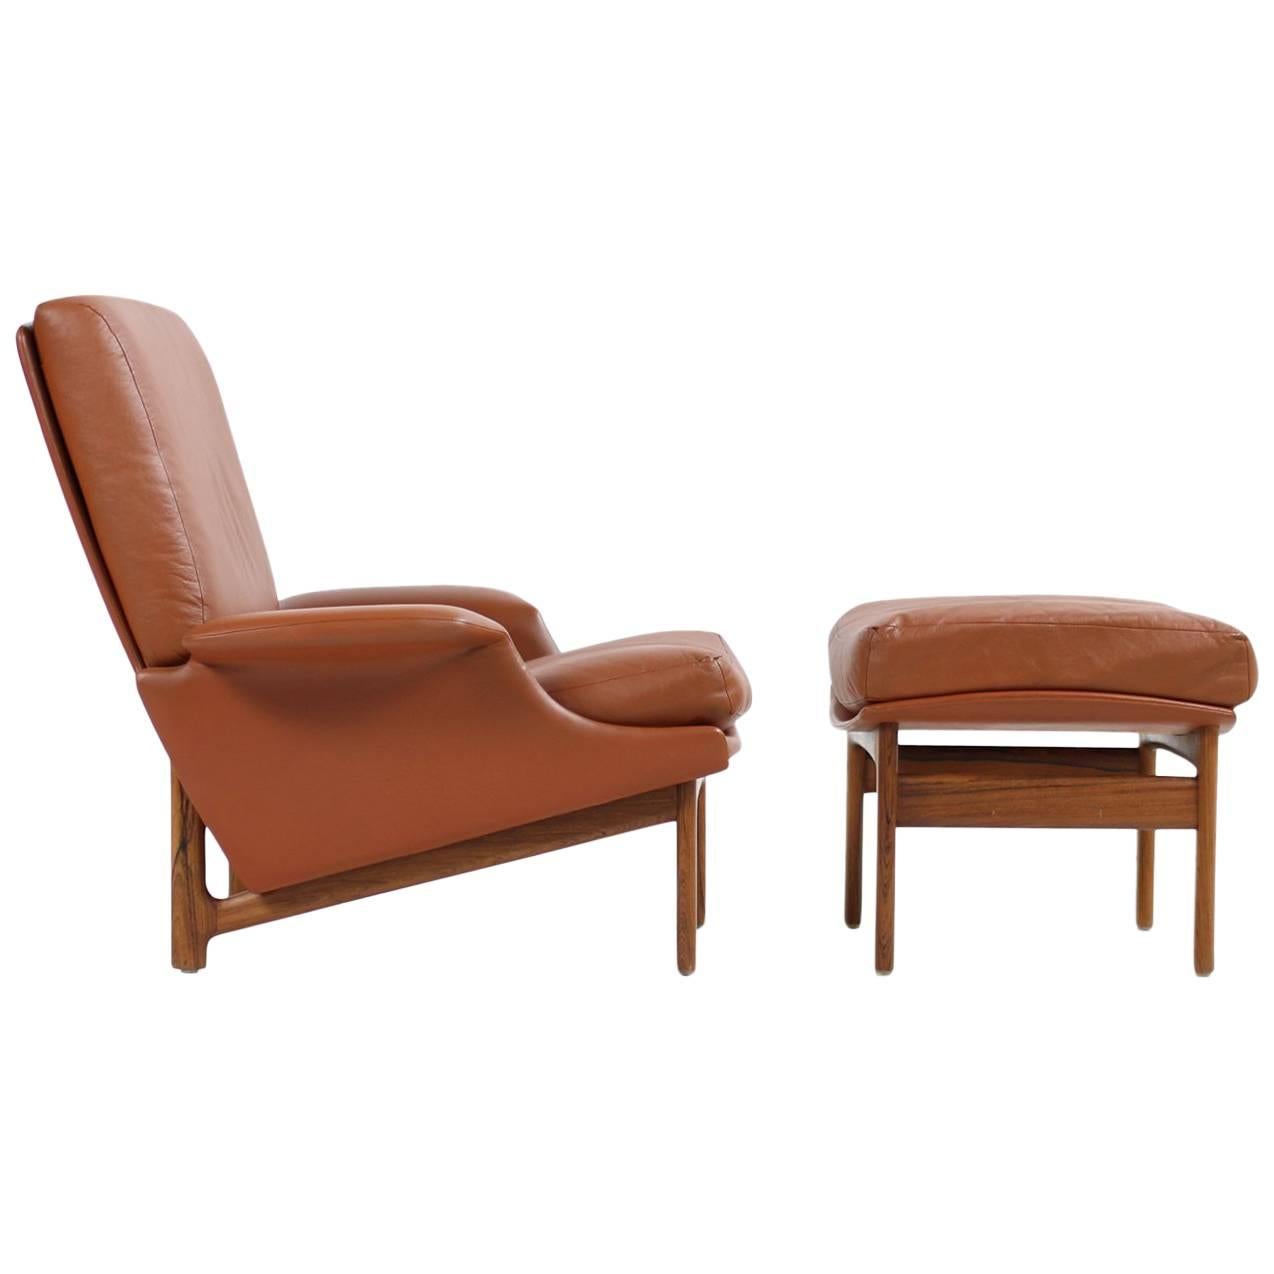 Exclusive 1960s Ib Kofod Larsen Lounge Chair 'Adam' Rosewood & Cognac Leather